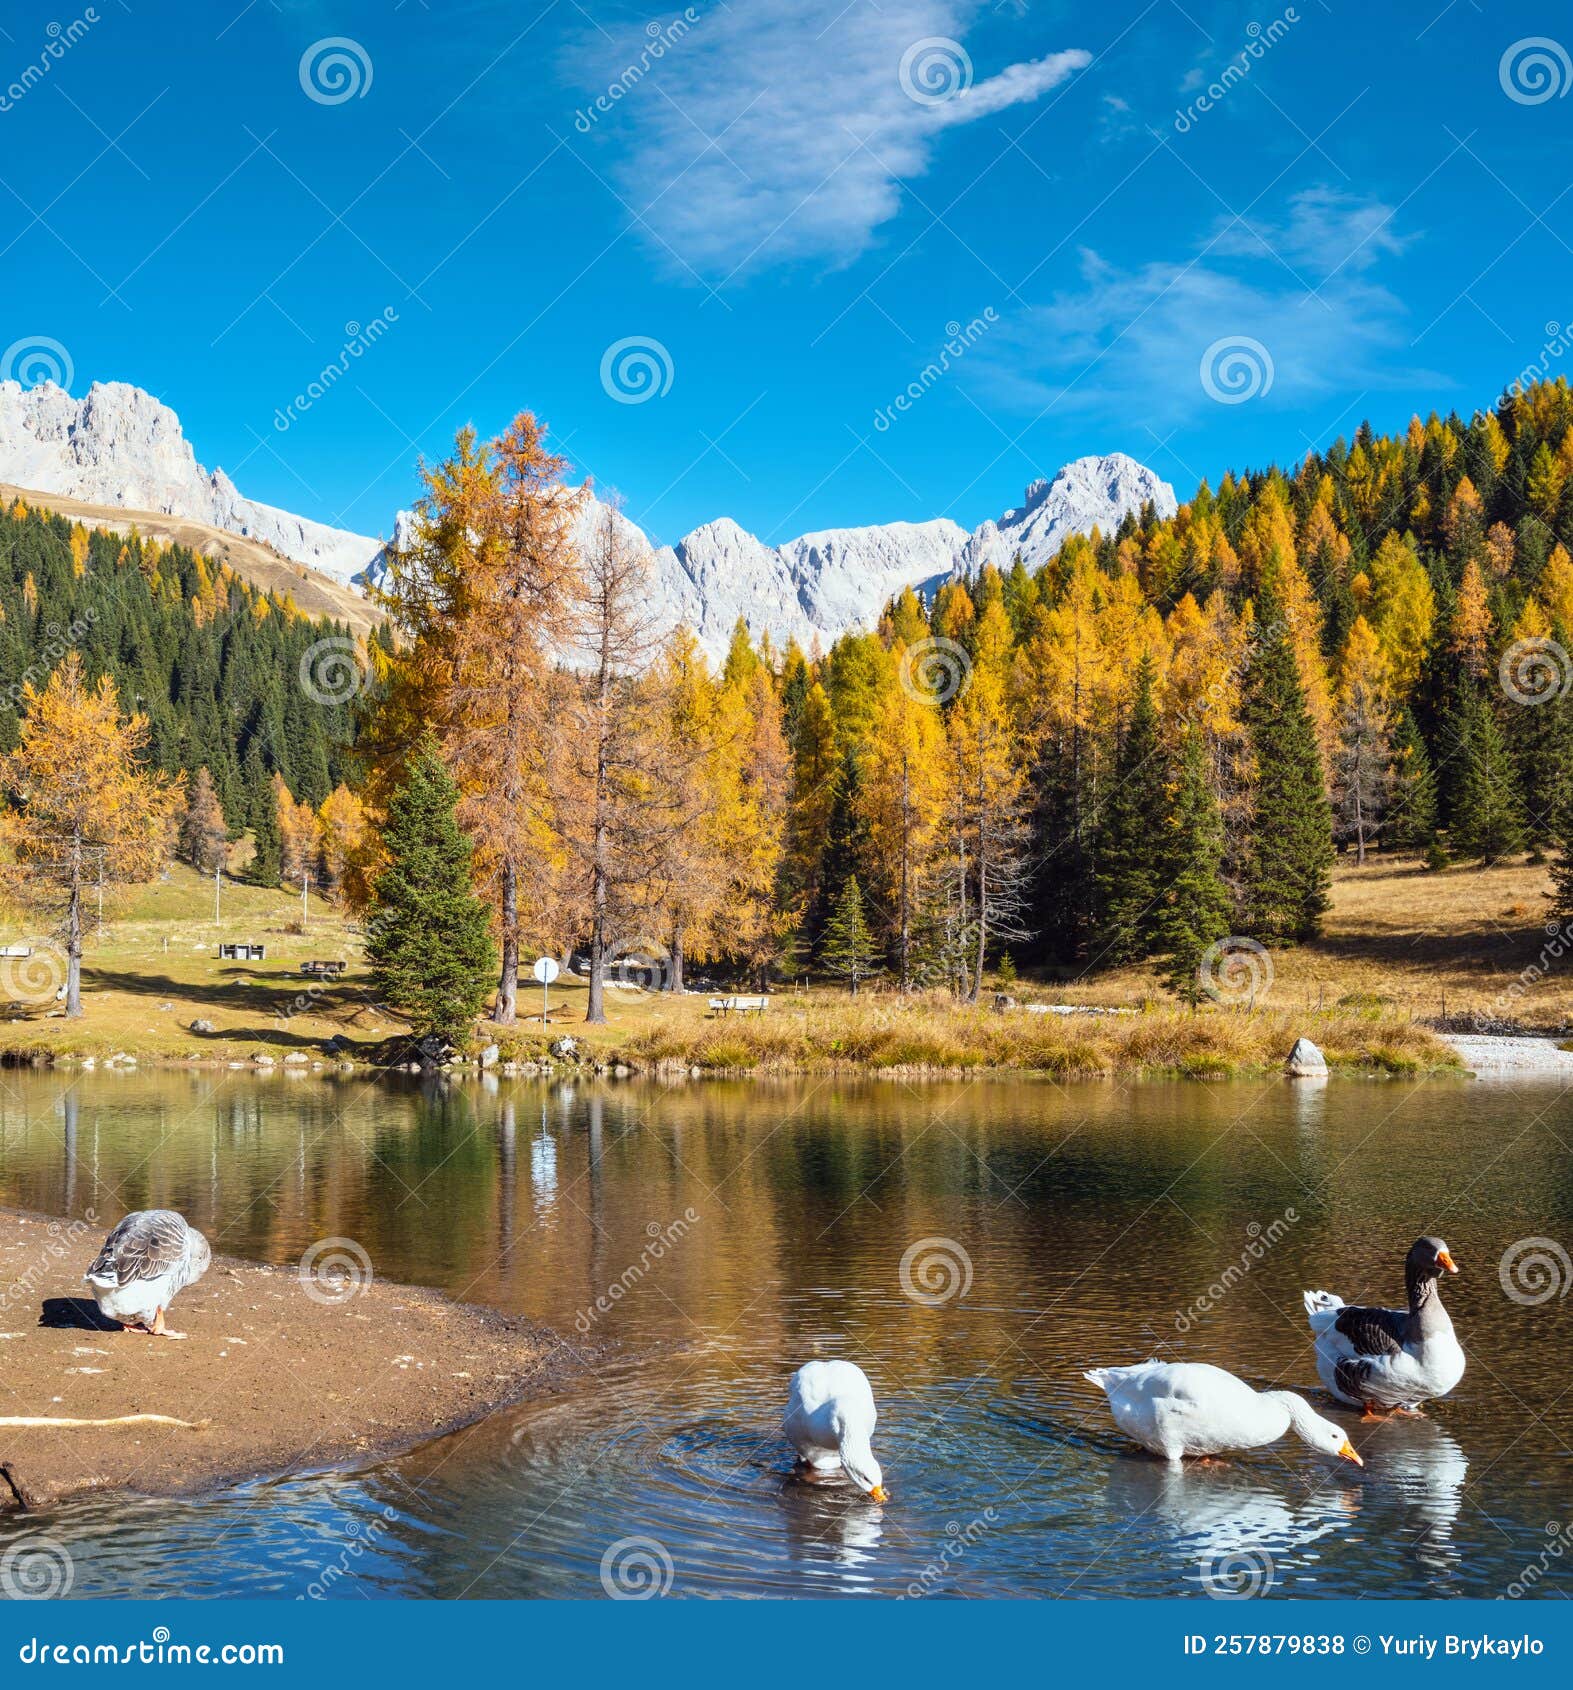 geese flock on autumn alpine mountain pond not far from san pellegrino pass, trentino, dolomites alps, italy